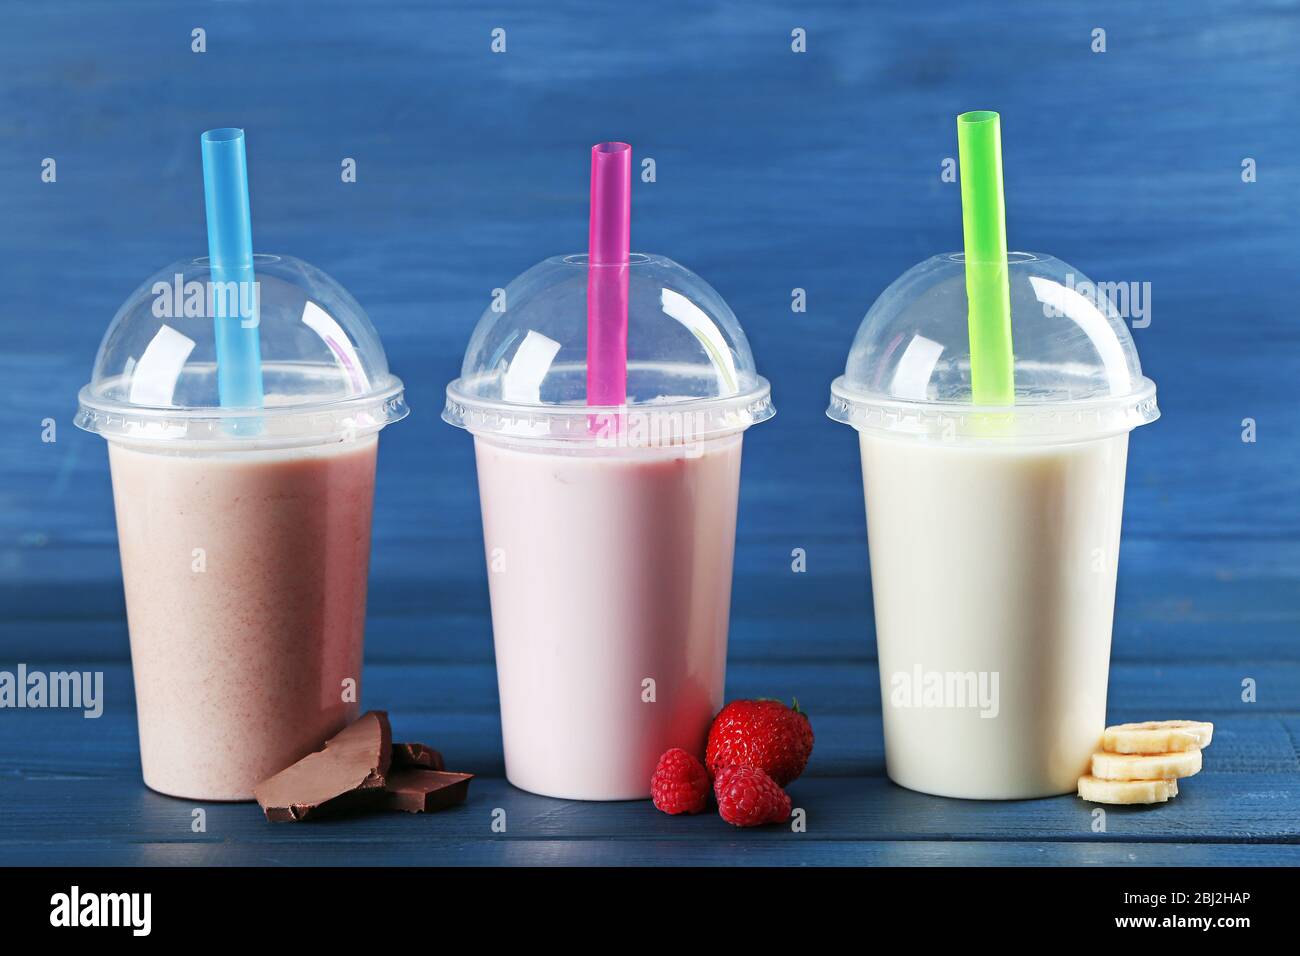 https://c8.alamy.com/comp/2BJ2HAP/plastic-cups-of-milkshake-on-color-wooden-background-2BJ2HAP.jpg